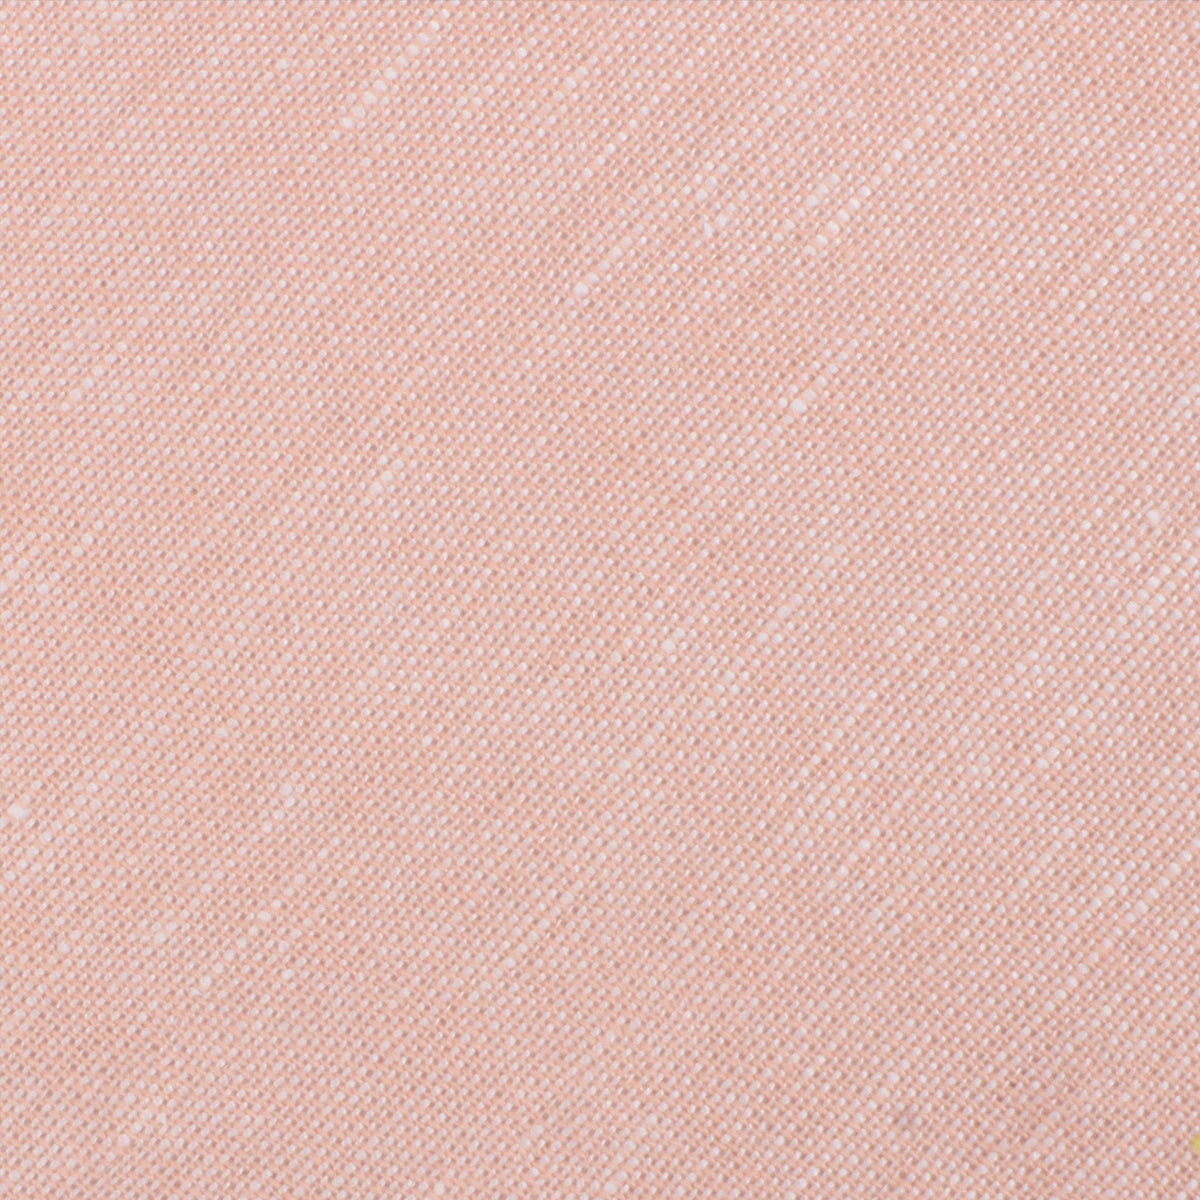 Ballet Blush Pink Chambray Linen Pocket Square Fabric